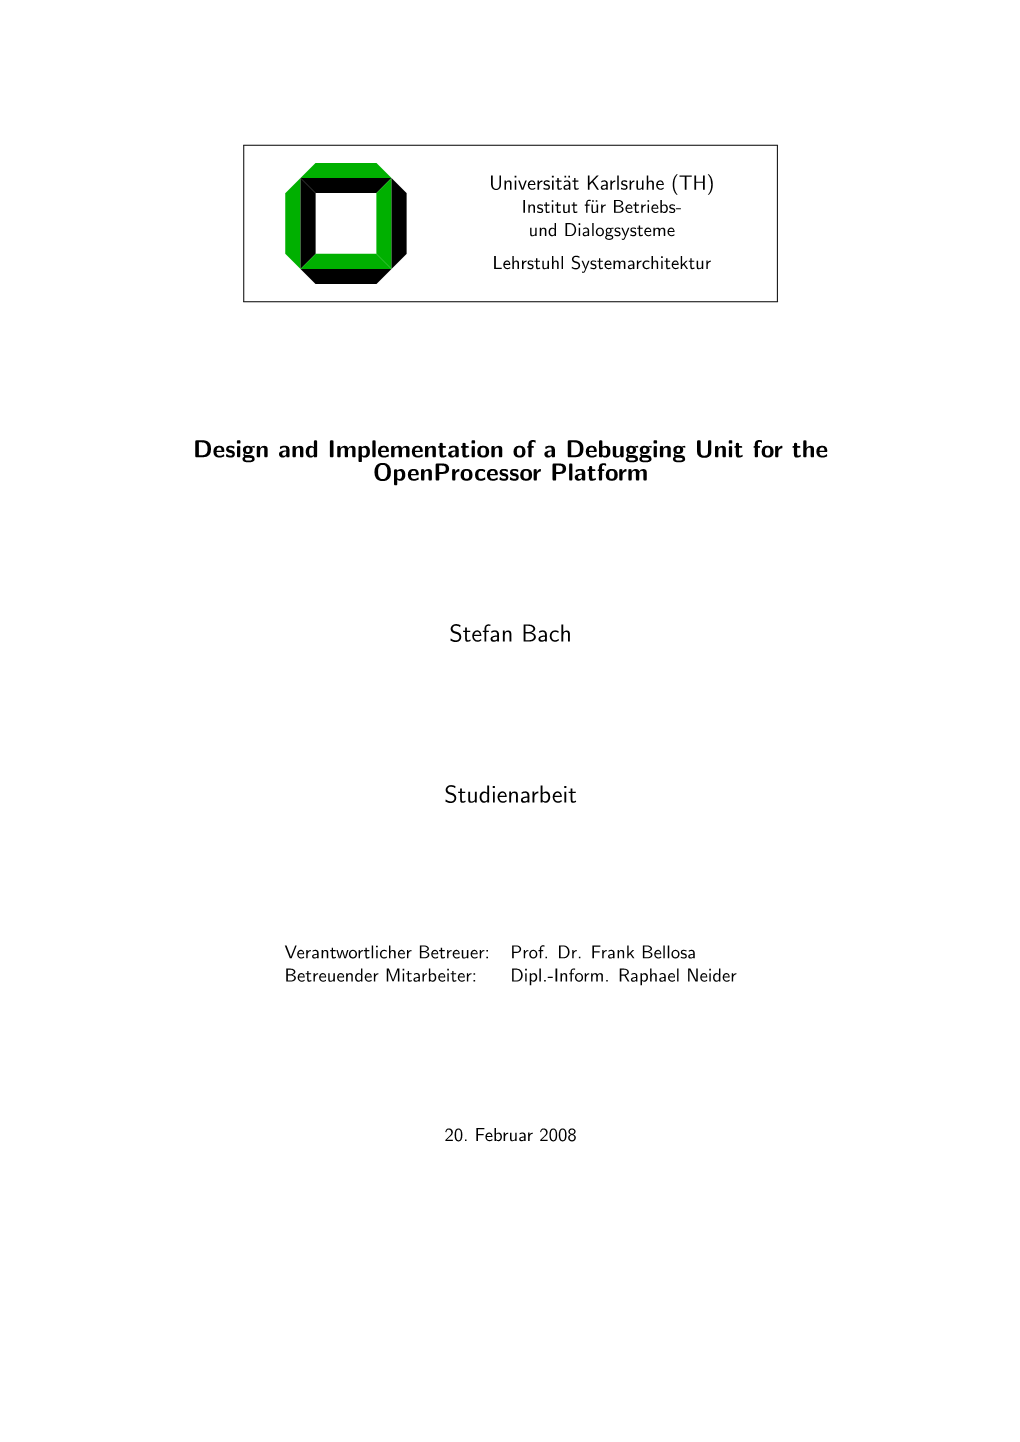 Design and Implementation of a Debugging Unit for the Openprocessor Platform